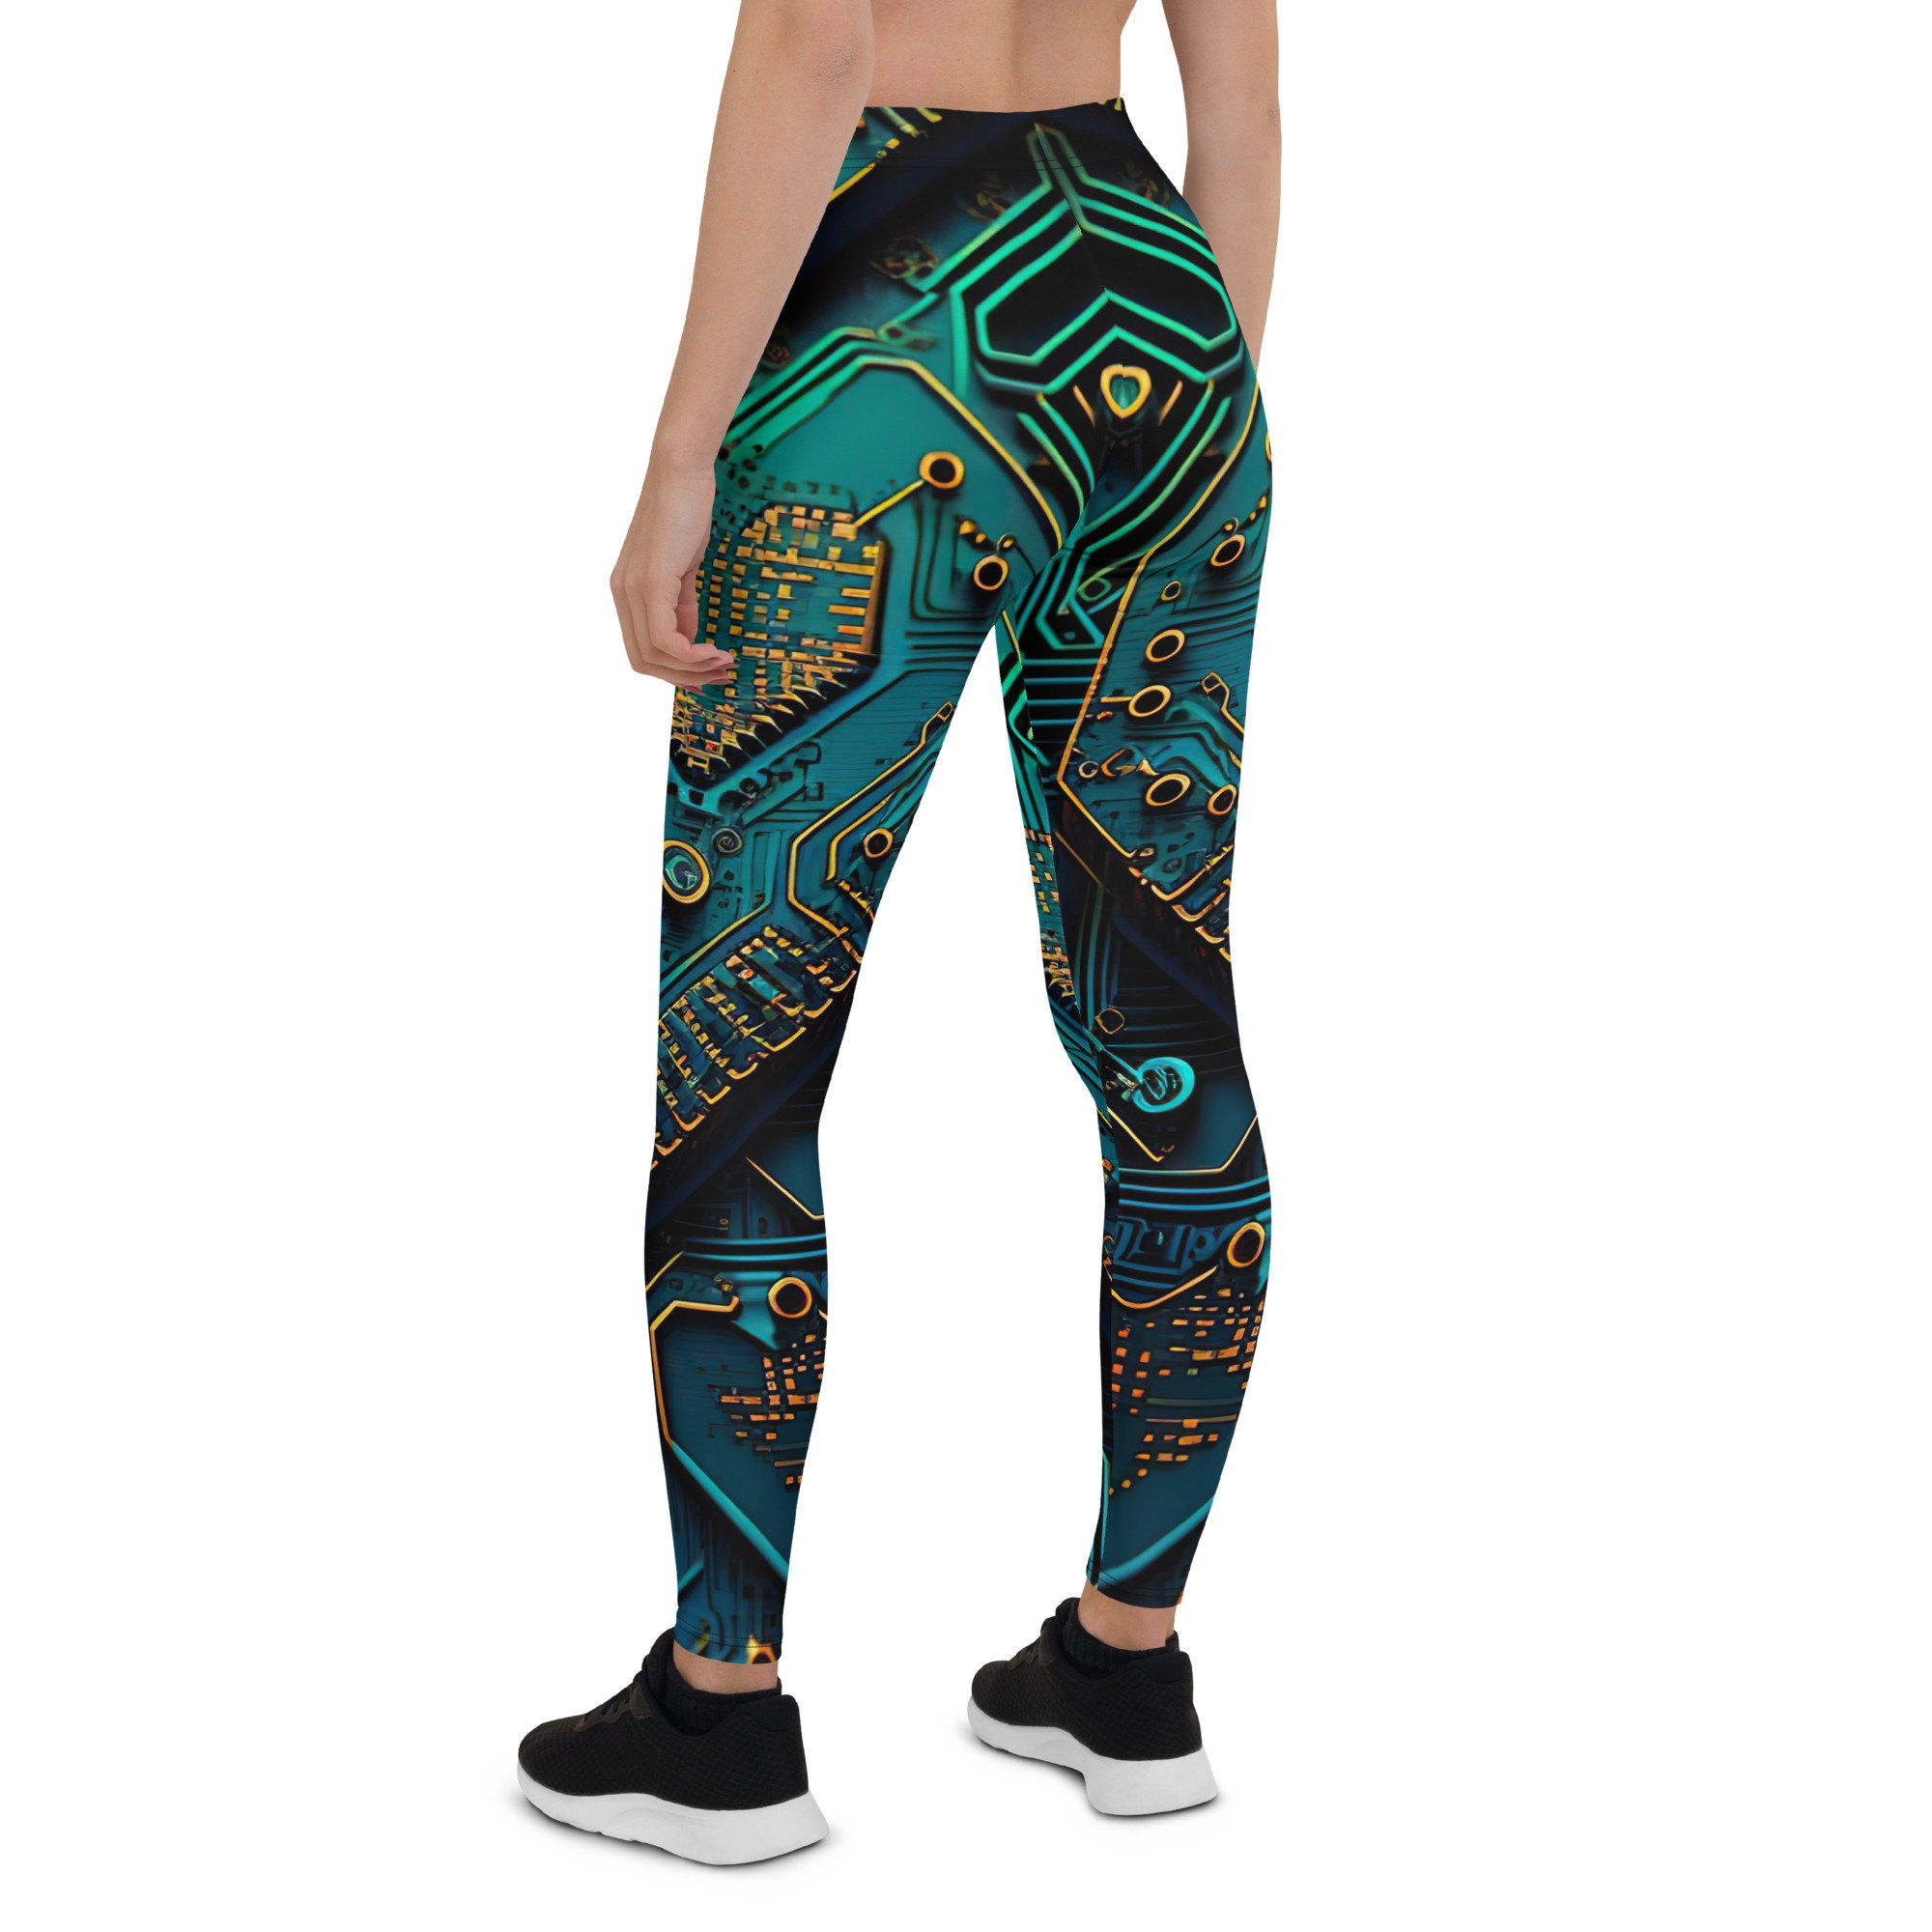 Cyberrobo Treggings Leggings Black Women's Pants Elastic Yoga